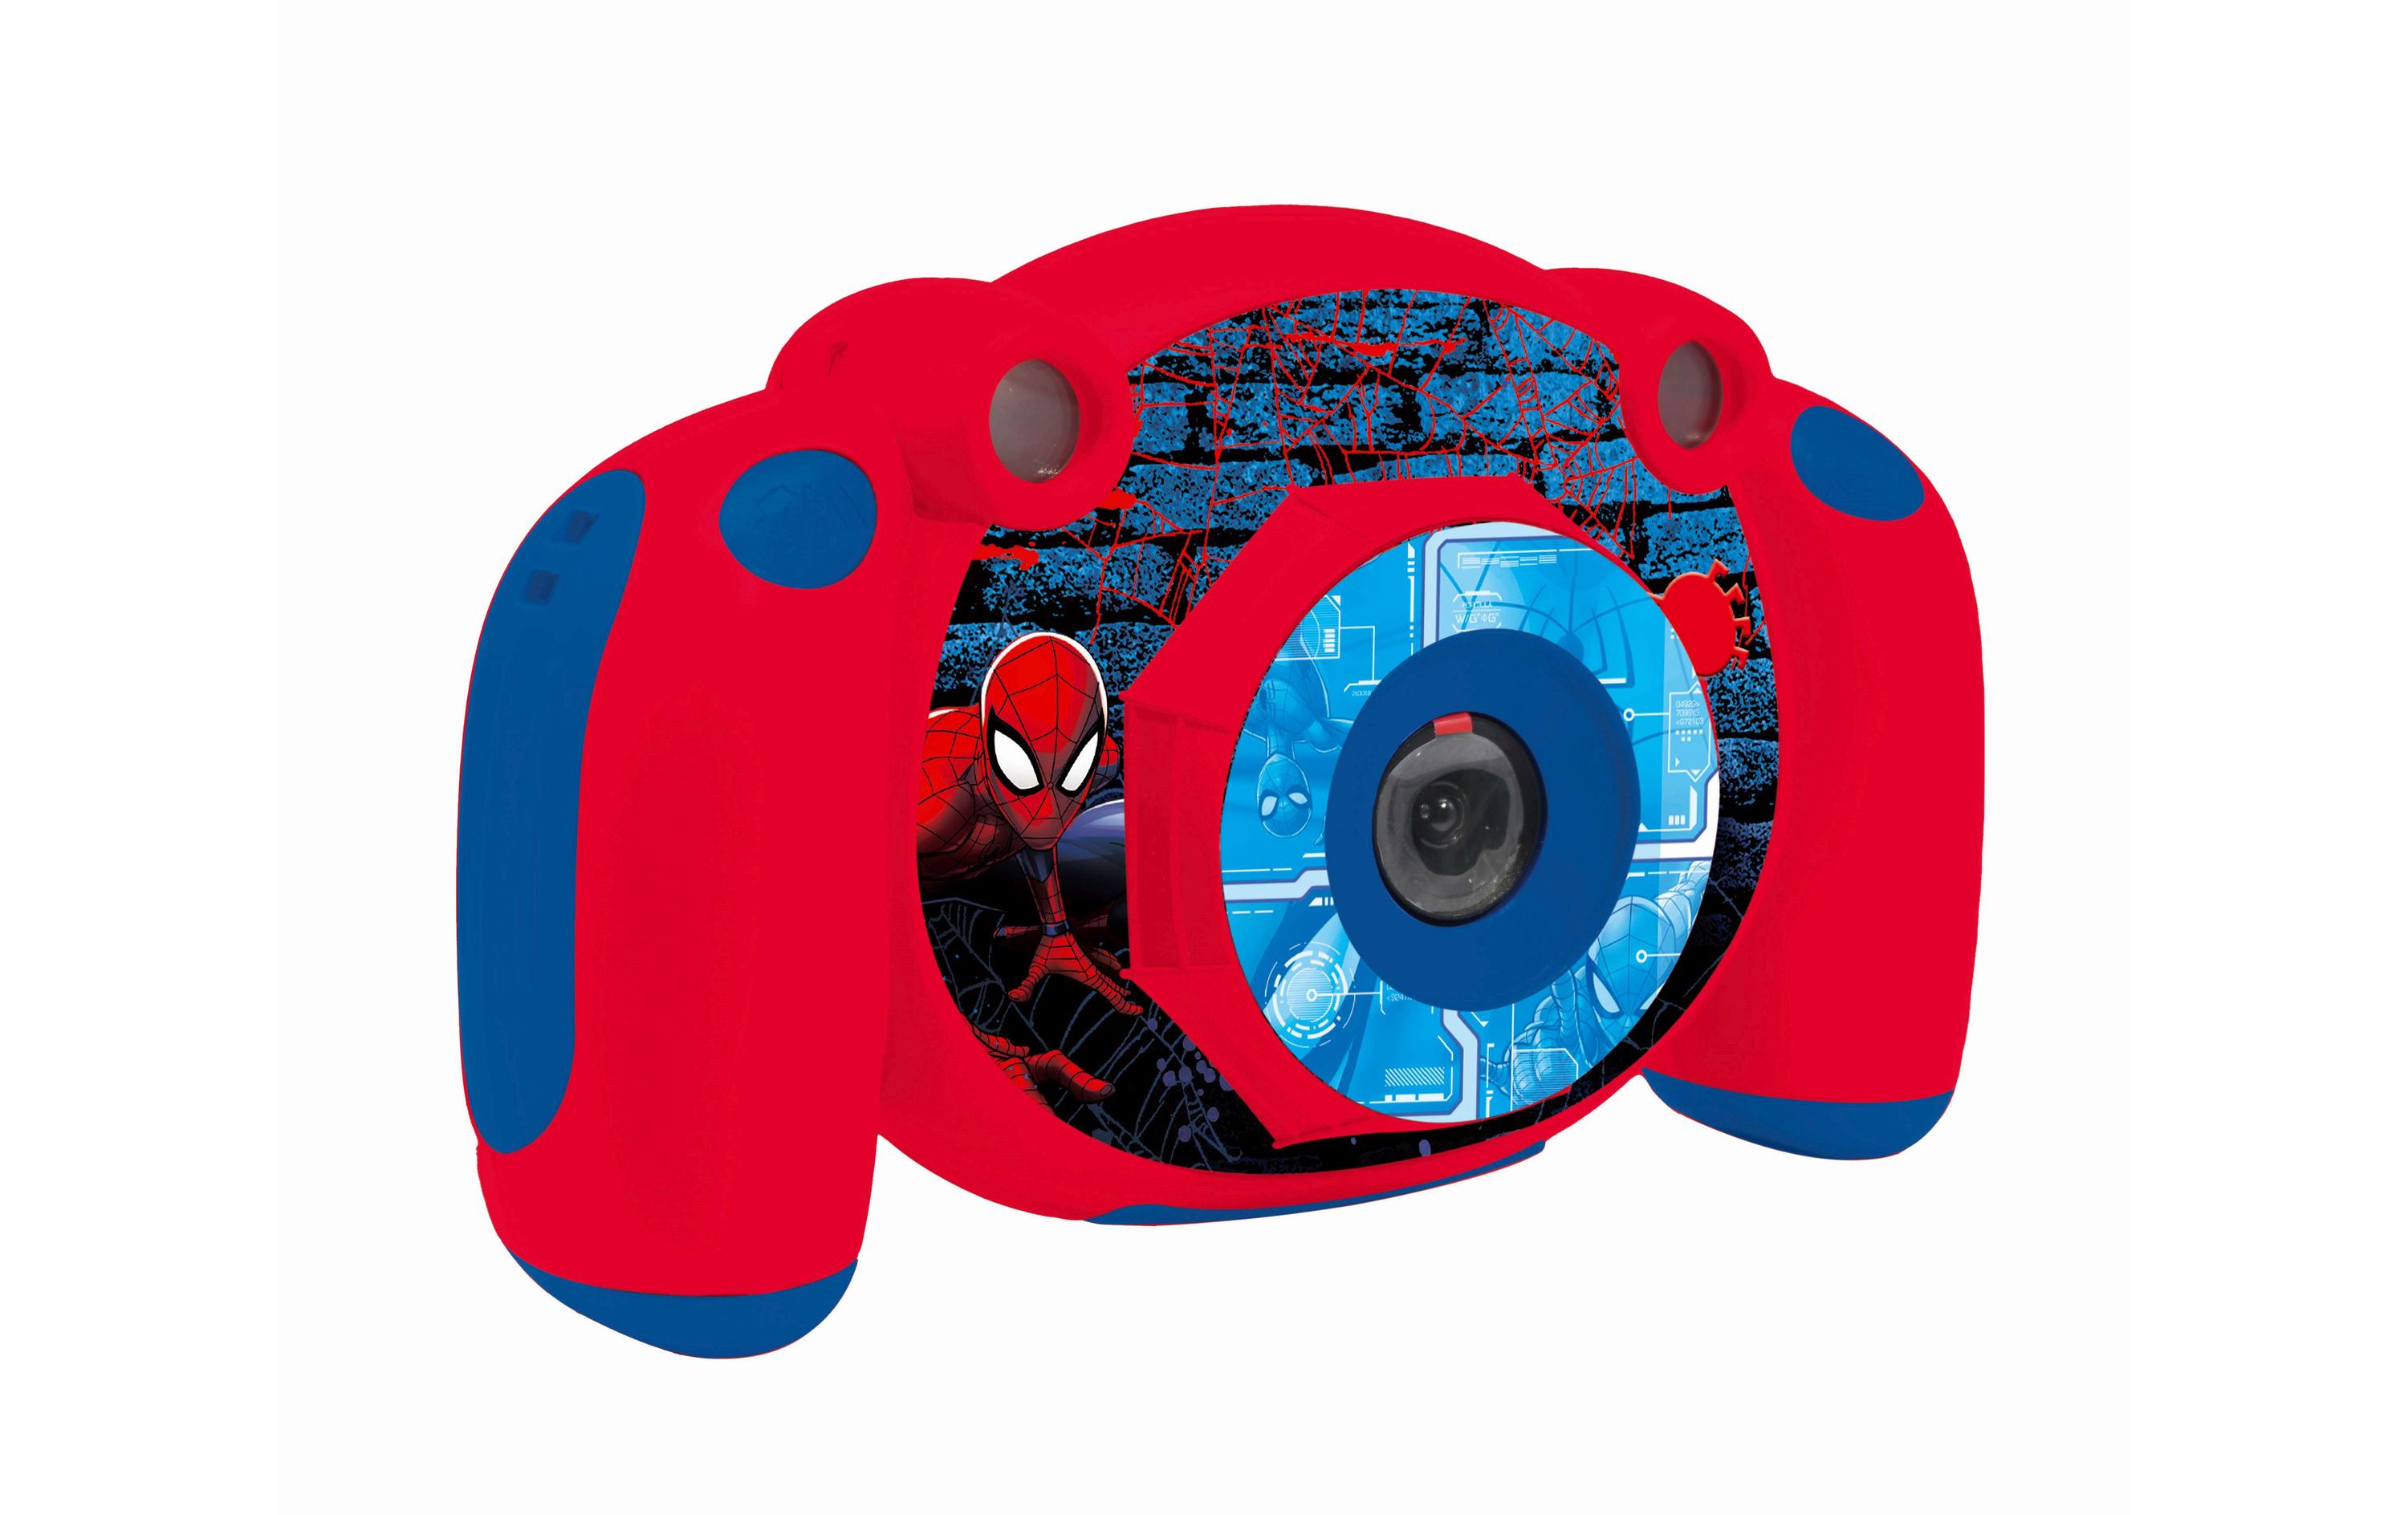 Lexibook Kinderkamera Spider-Man Blau/Rot